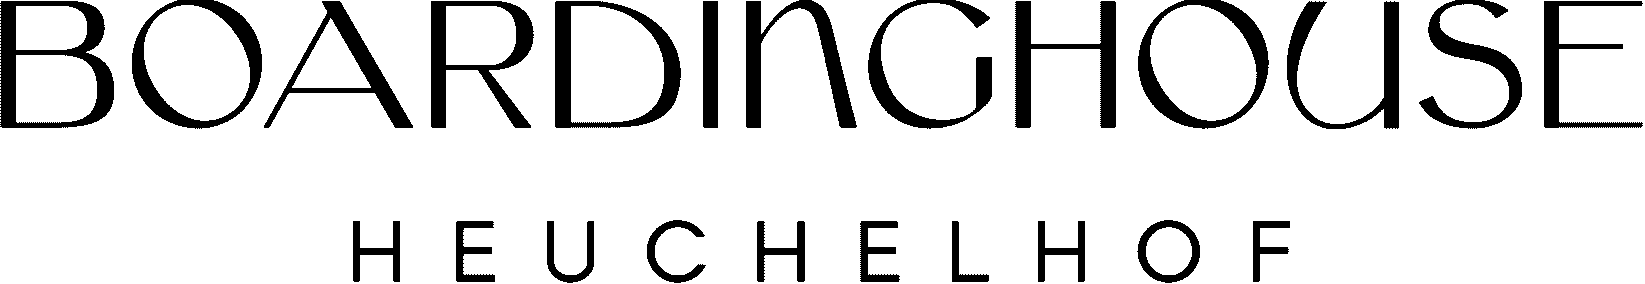 Boardinghouse-Heuchelhof Logo